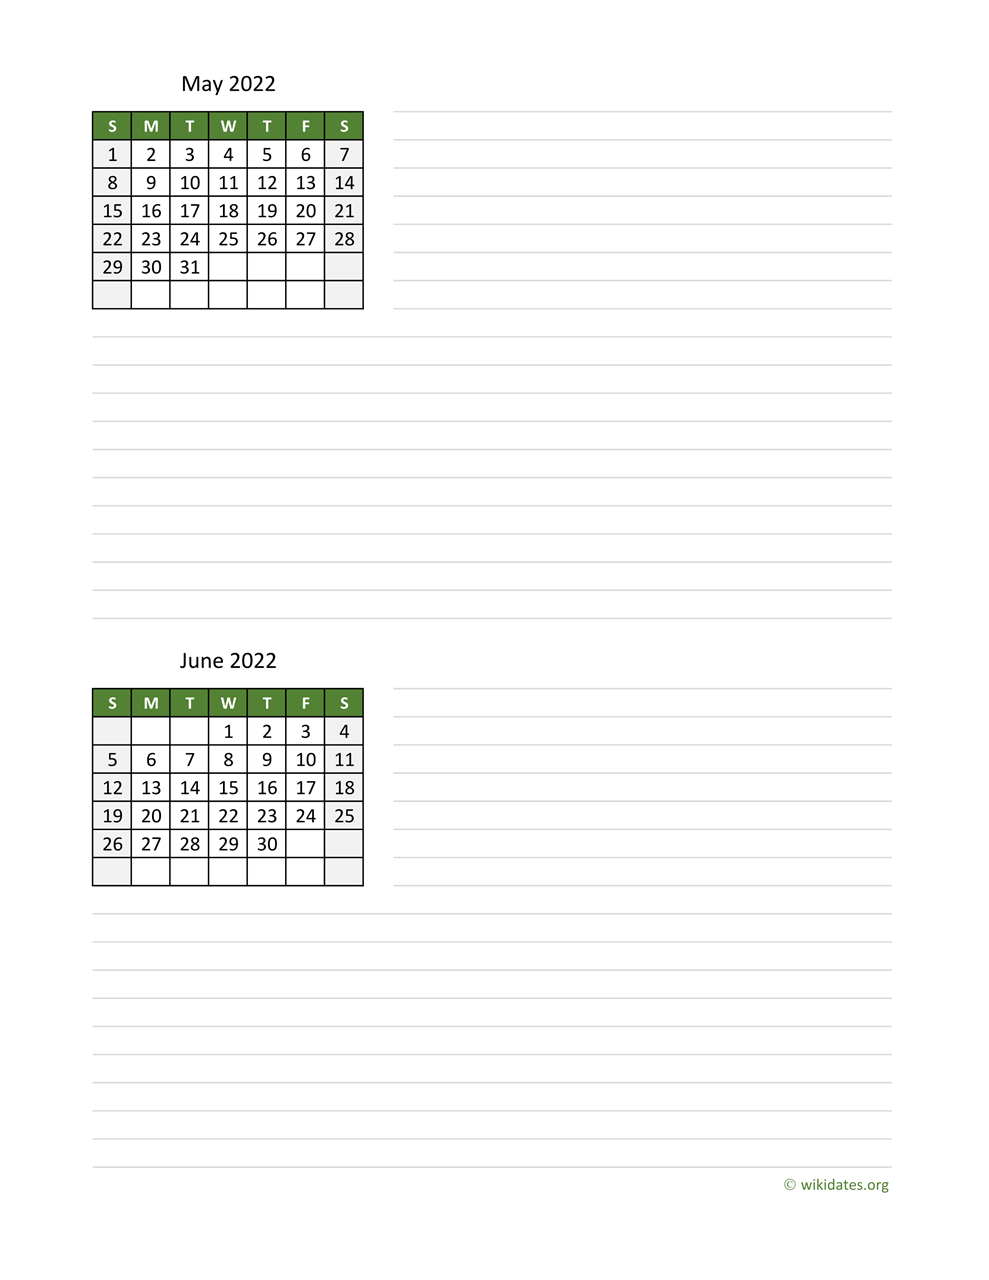 May And June 2022 Calendar May And June 2022 Calendar | Wikidates.org